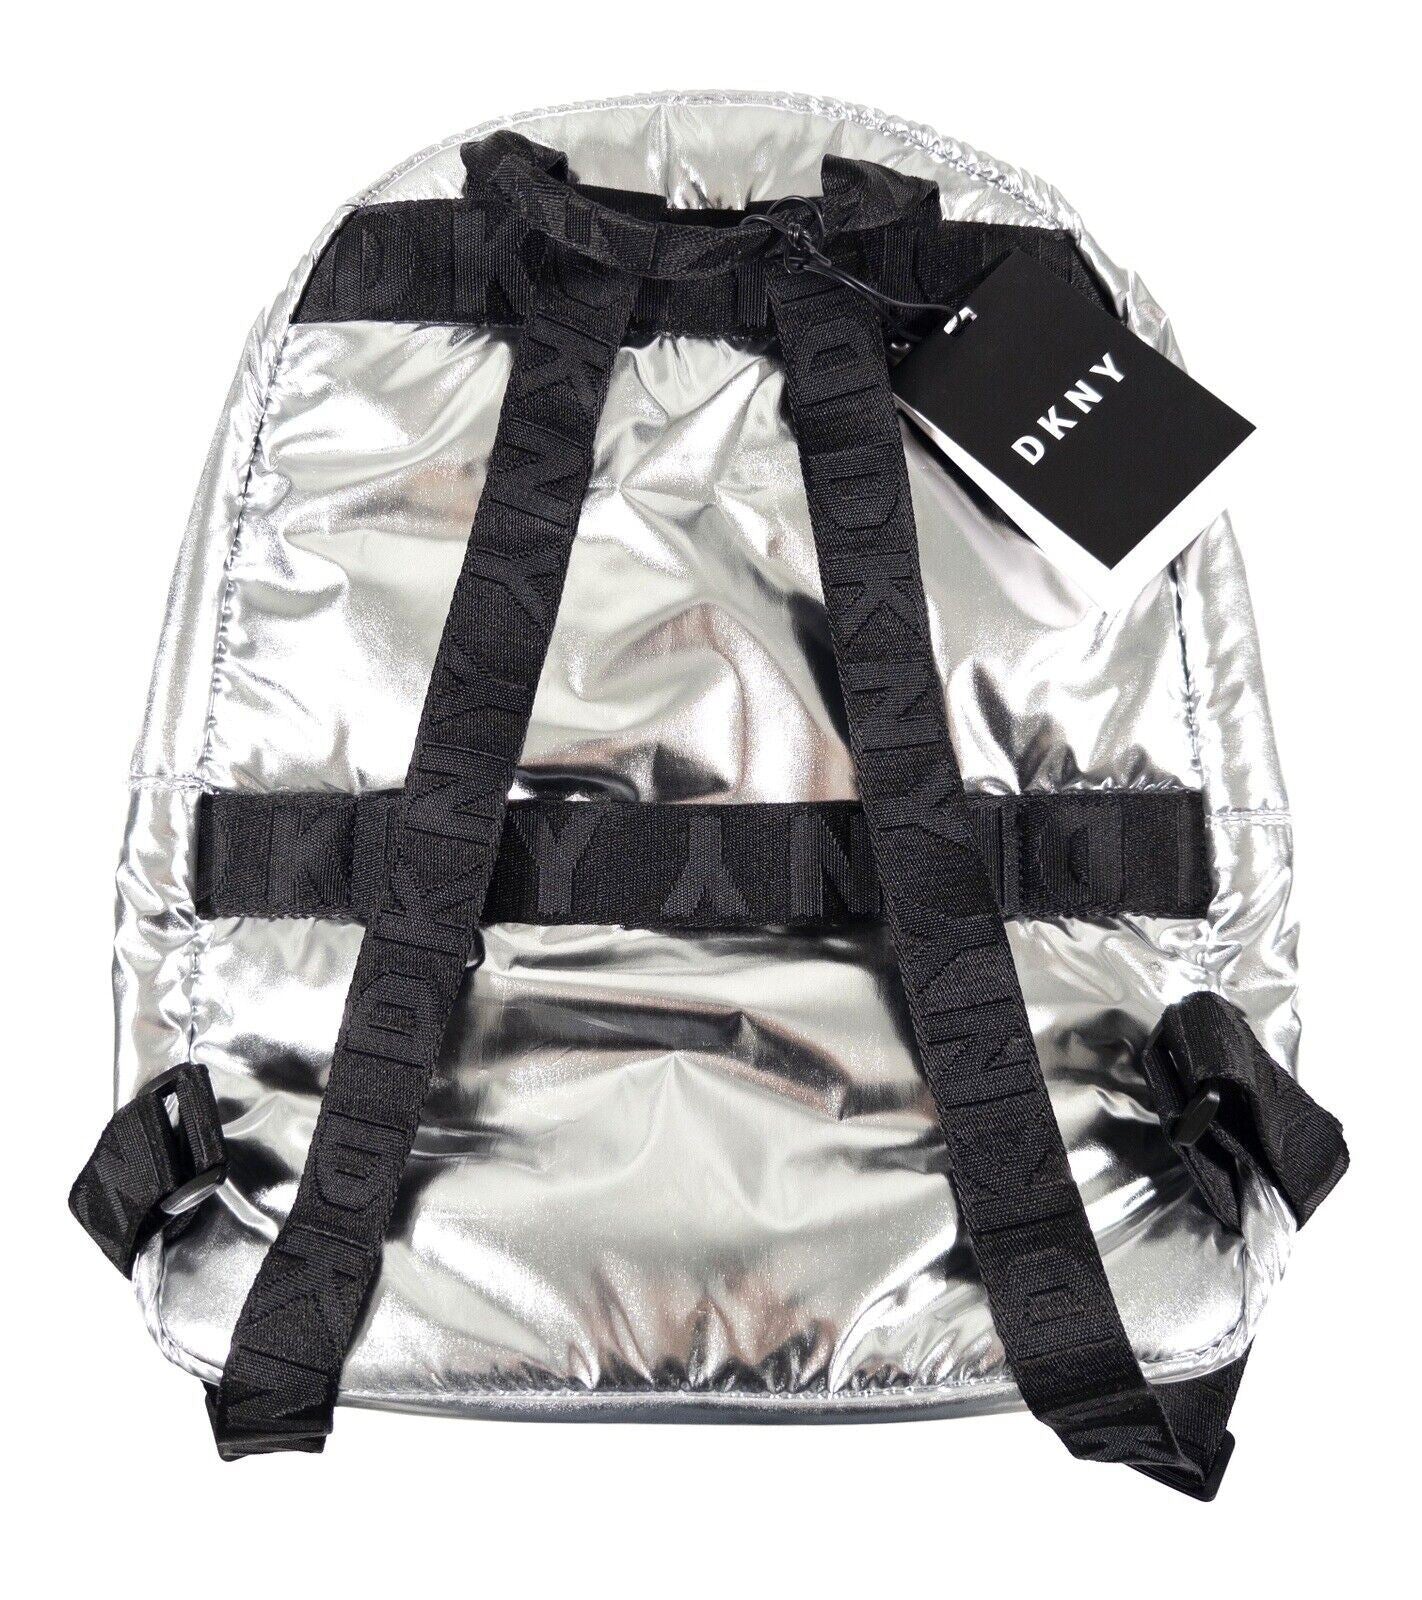 DKNY Silver Metallic Backpack Rucksack Bag Large